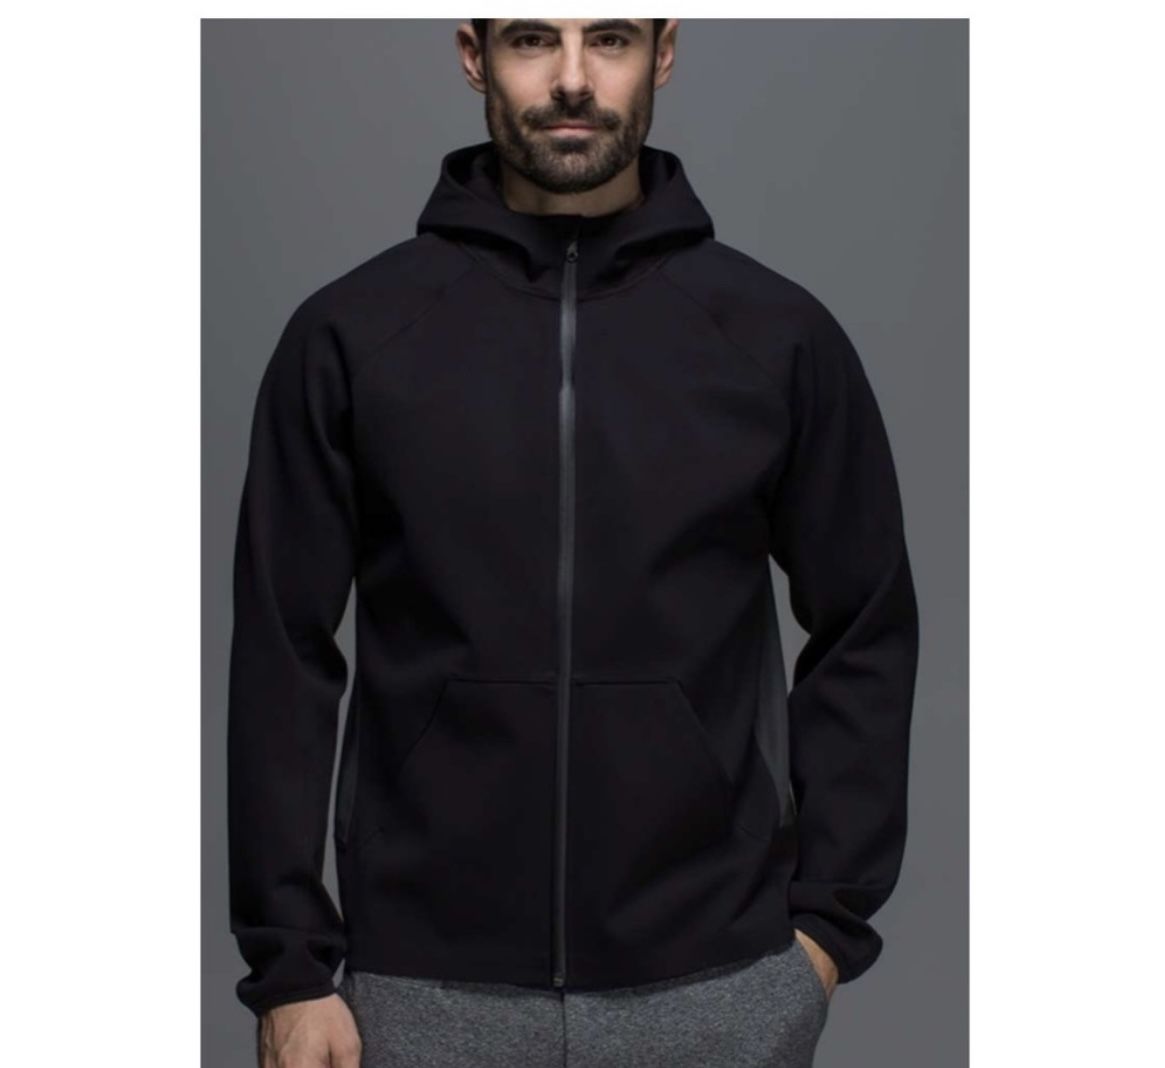 Lululemon chamber hoodie black jacket L